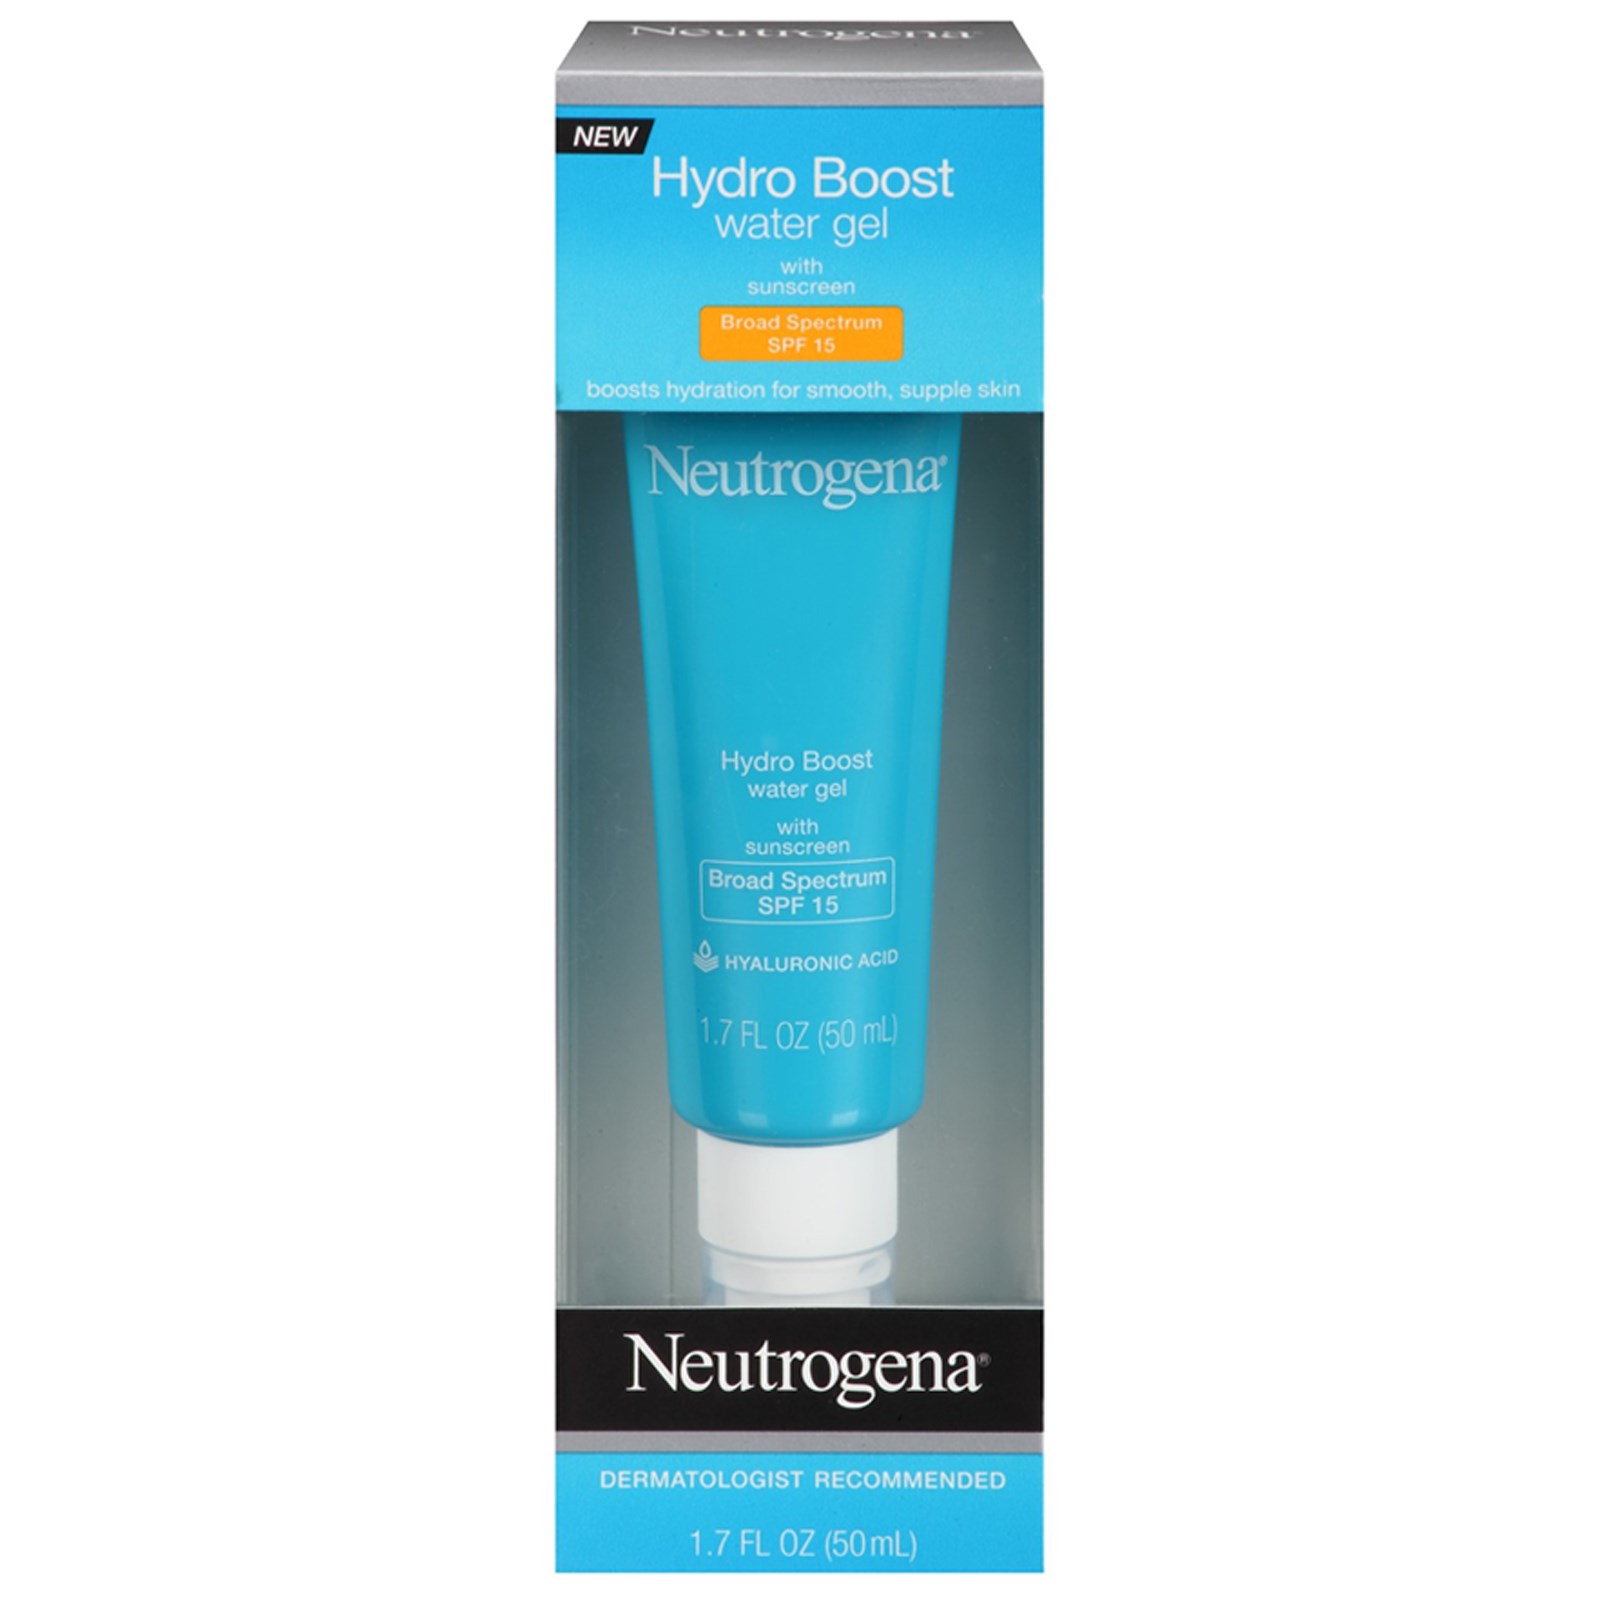 neutrogena hydro boost water gel 15g ราคา for men